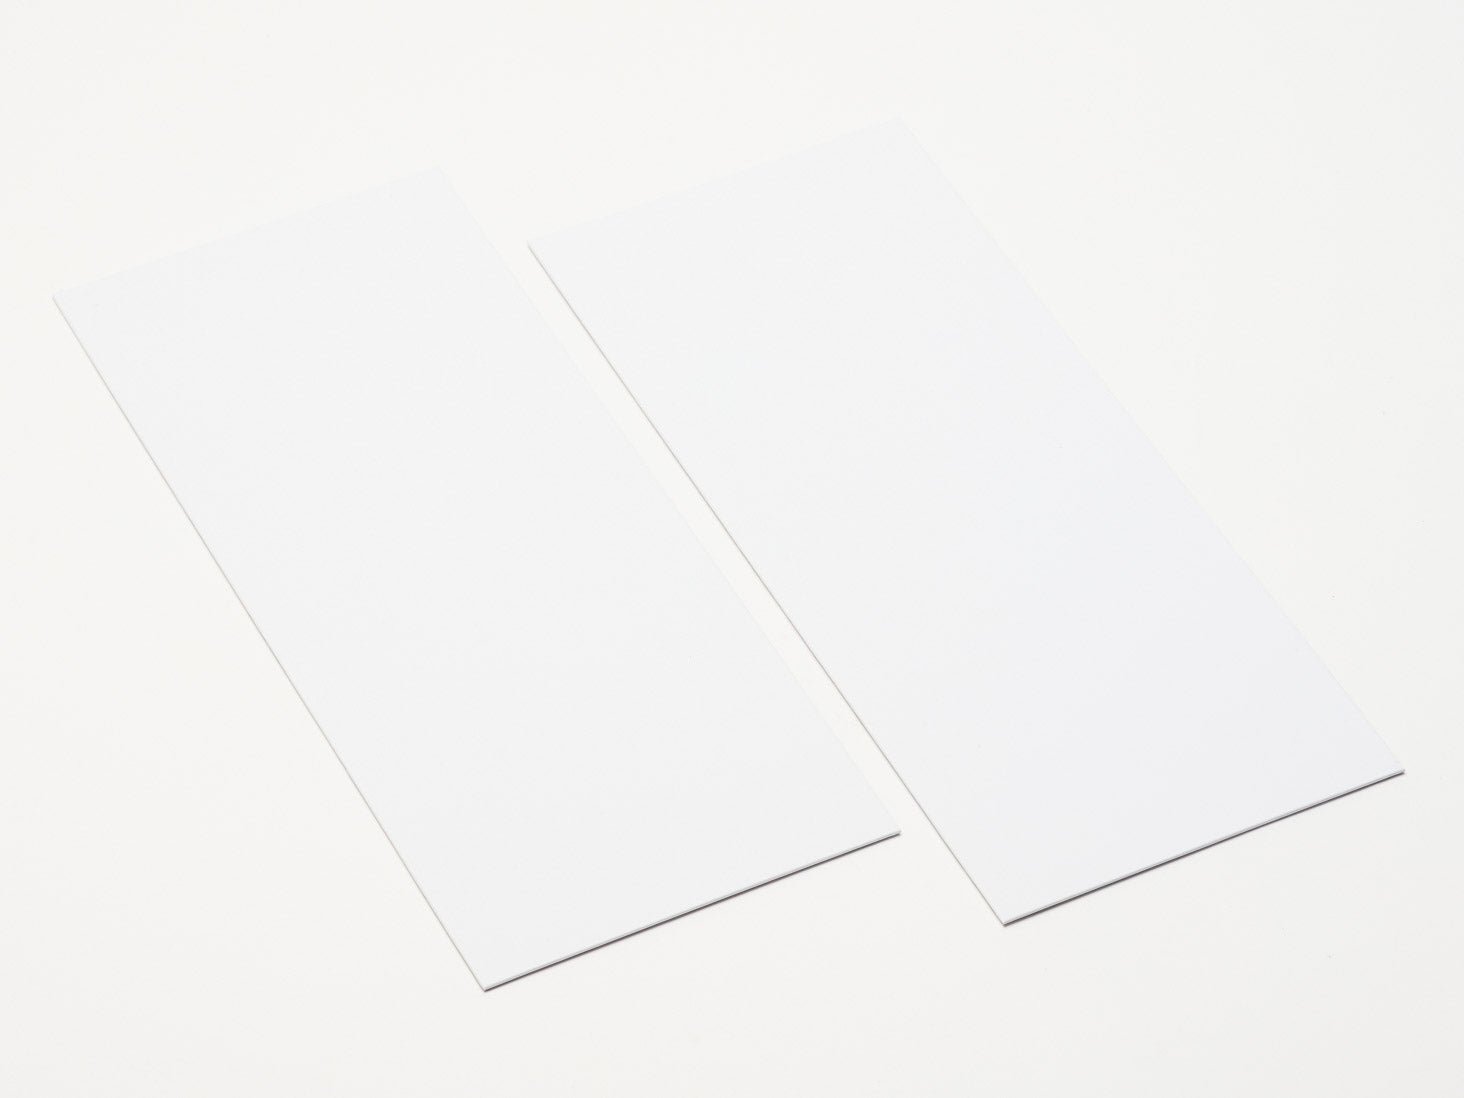 Sample White Gloss FAB Sides® Decorative Side Panels XL Deep